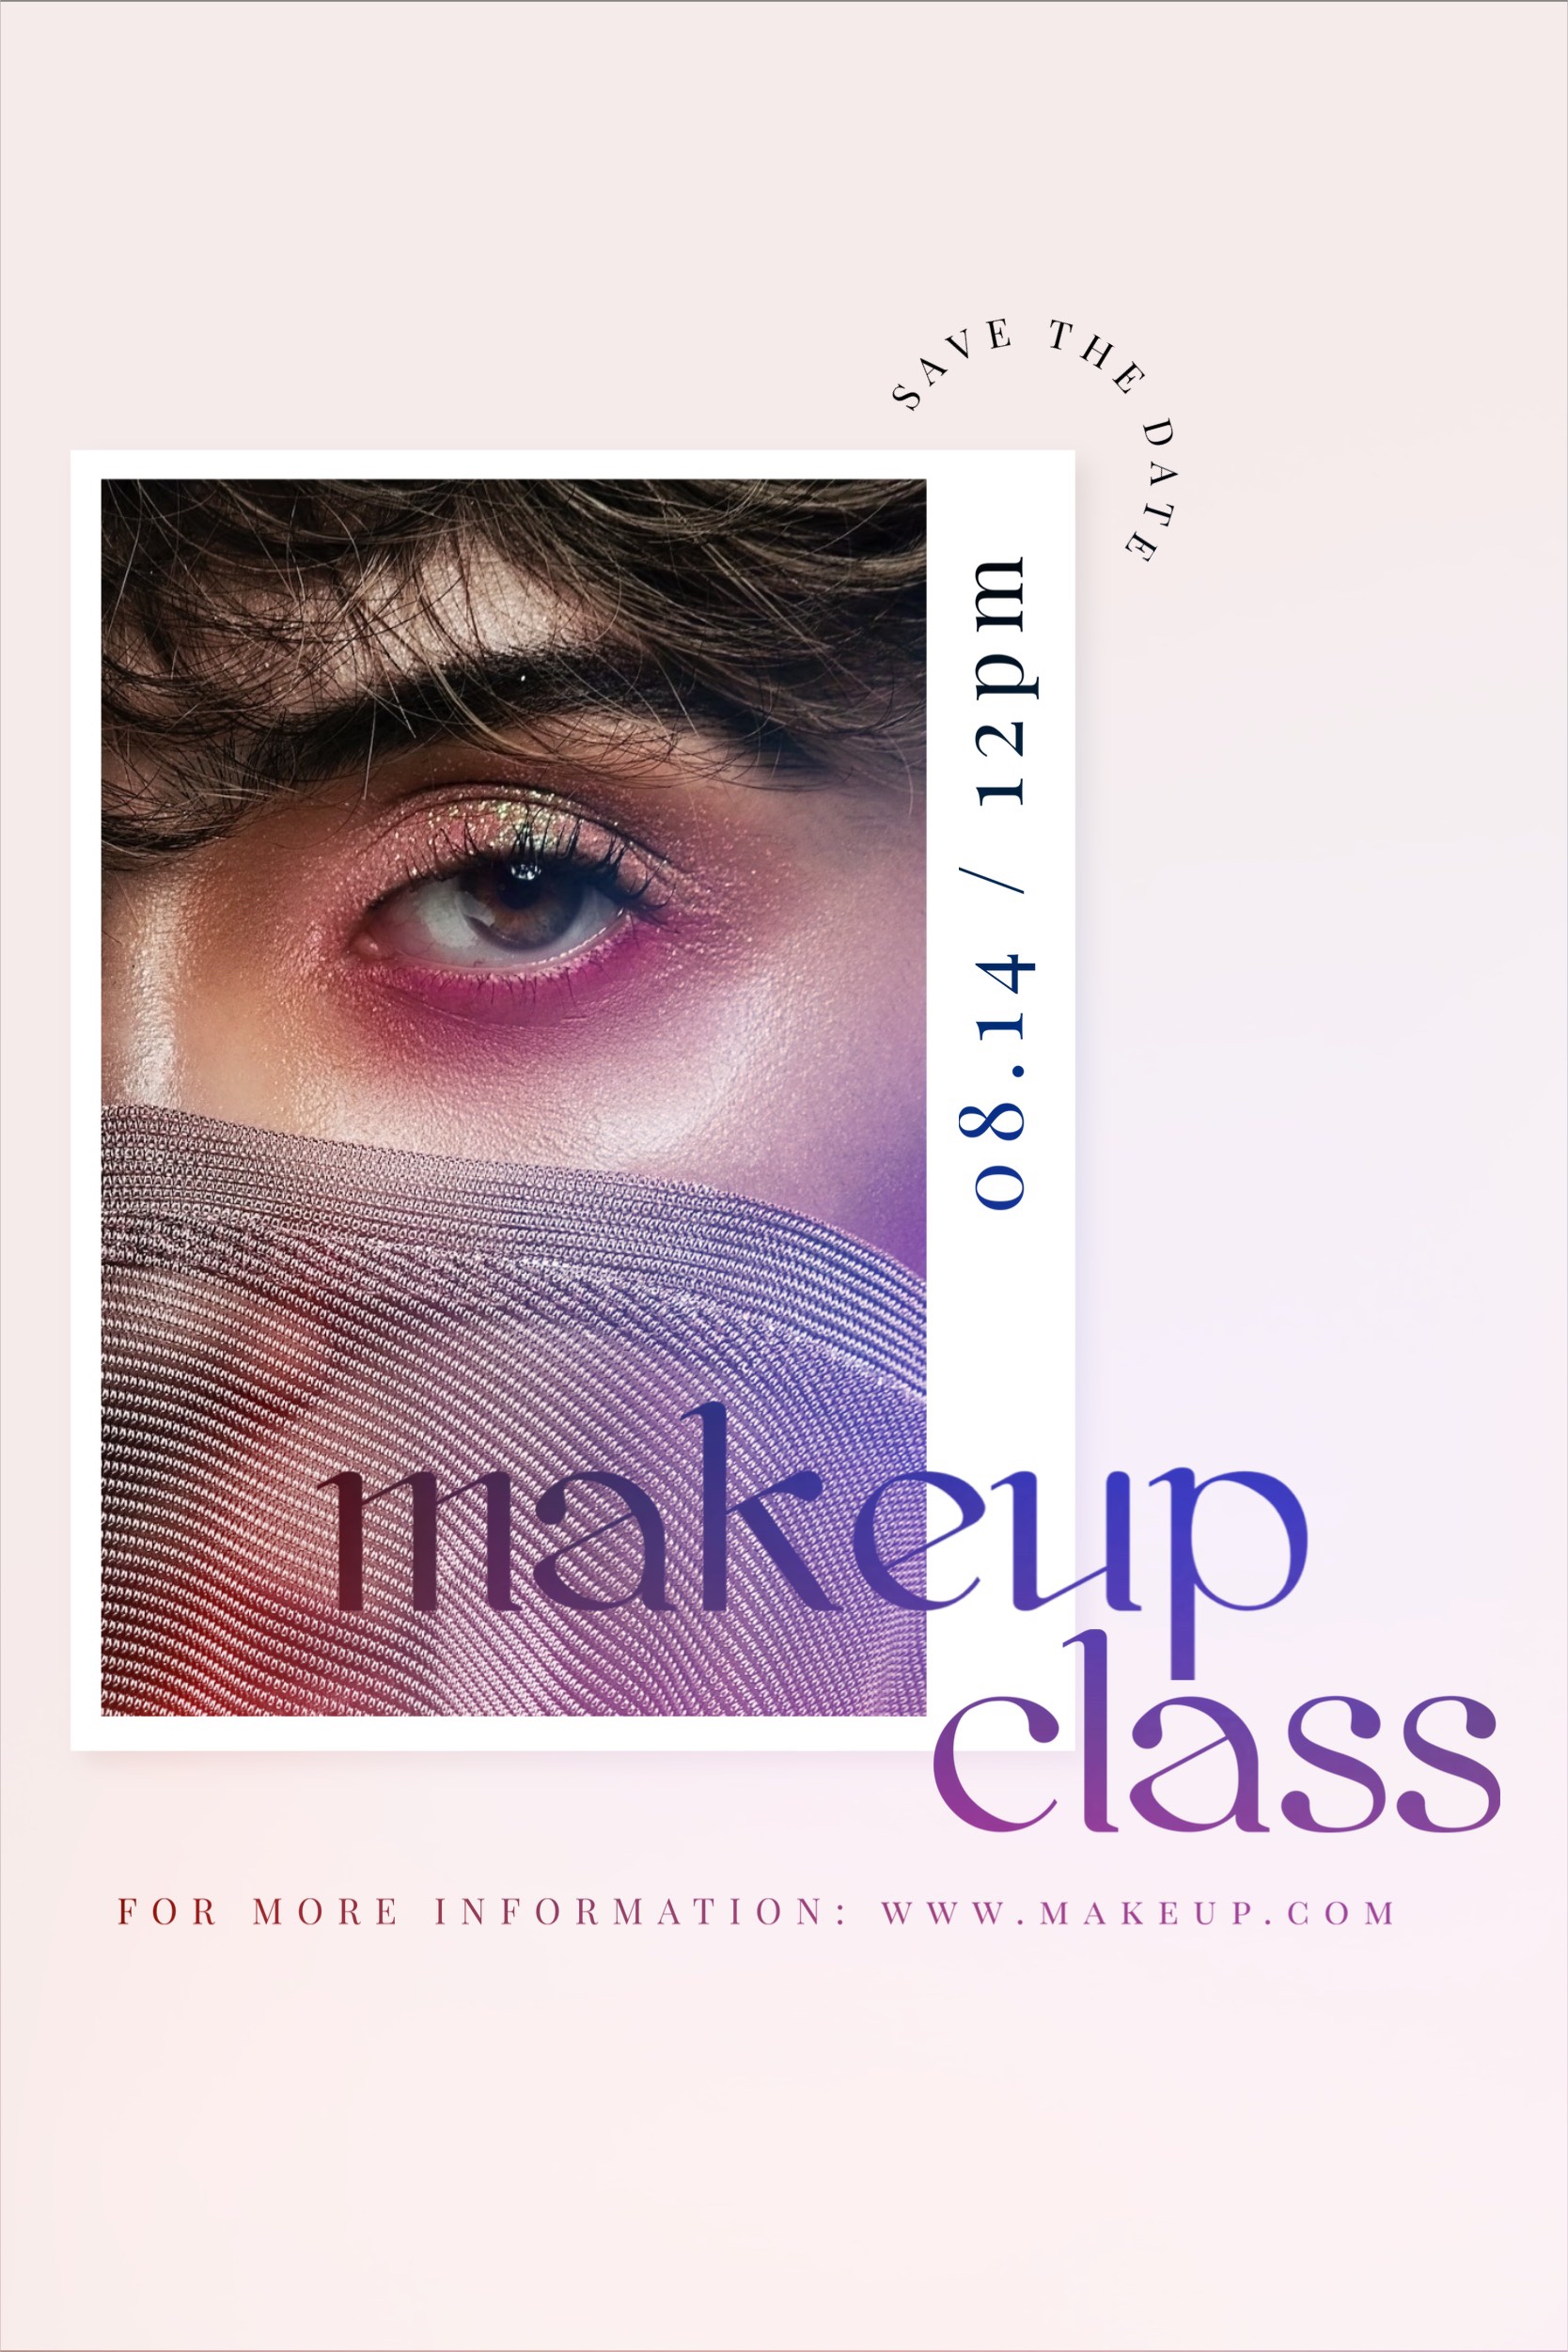 makeup class invitation template